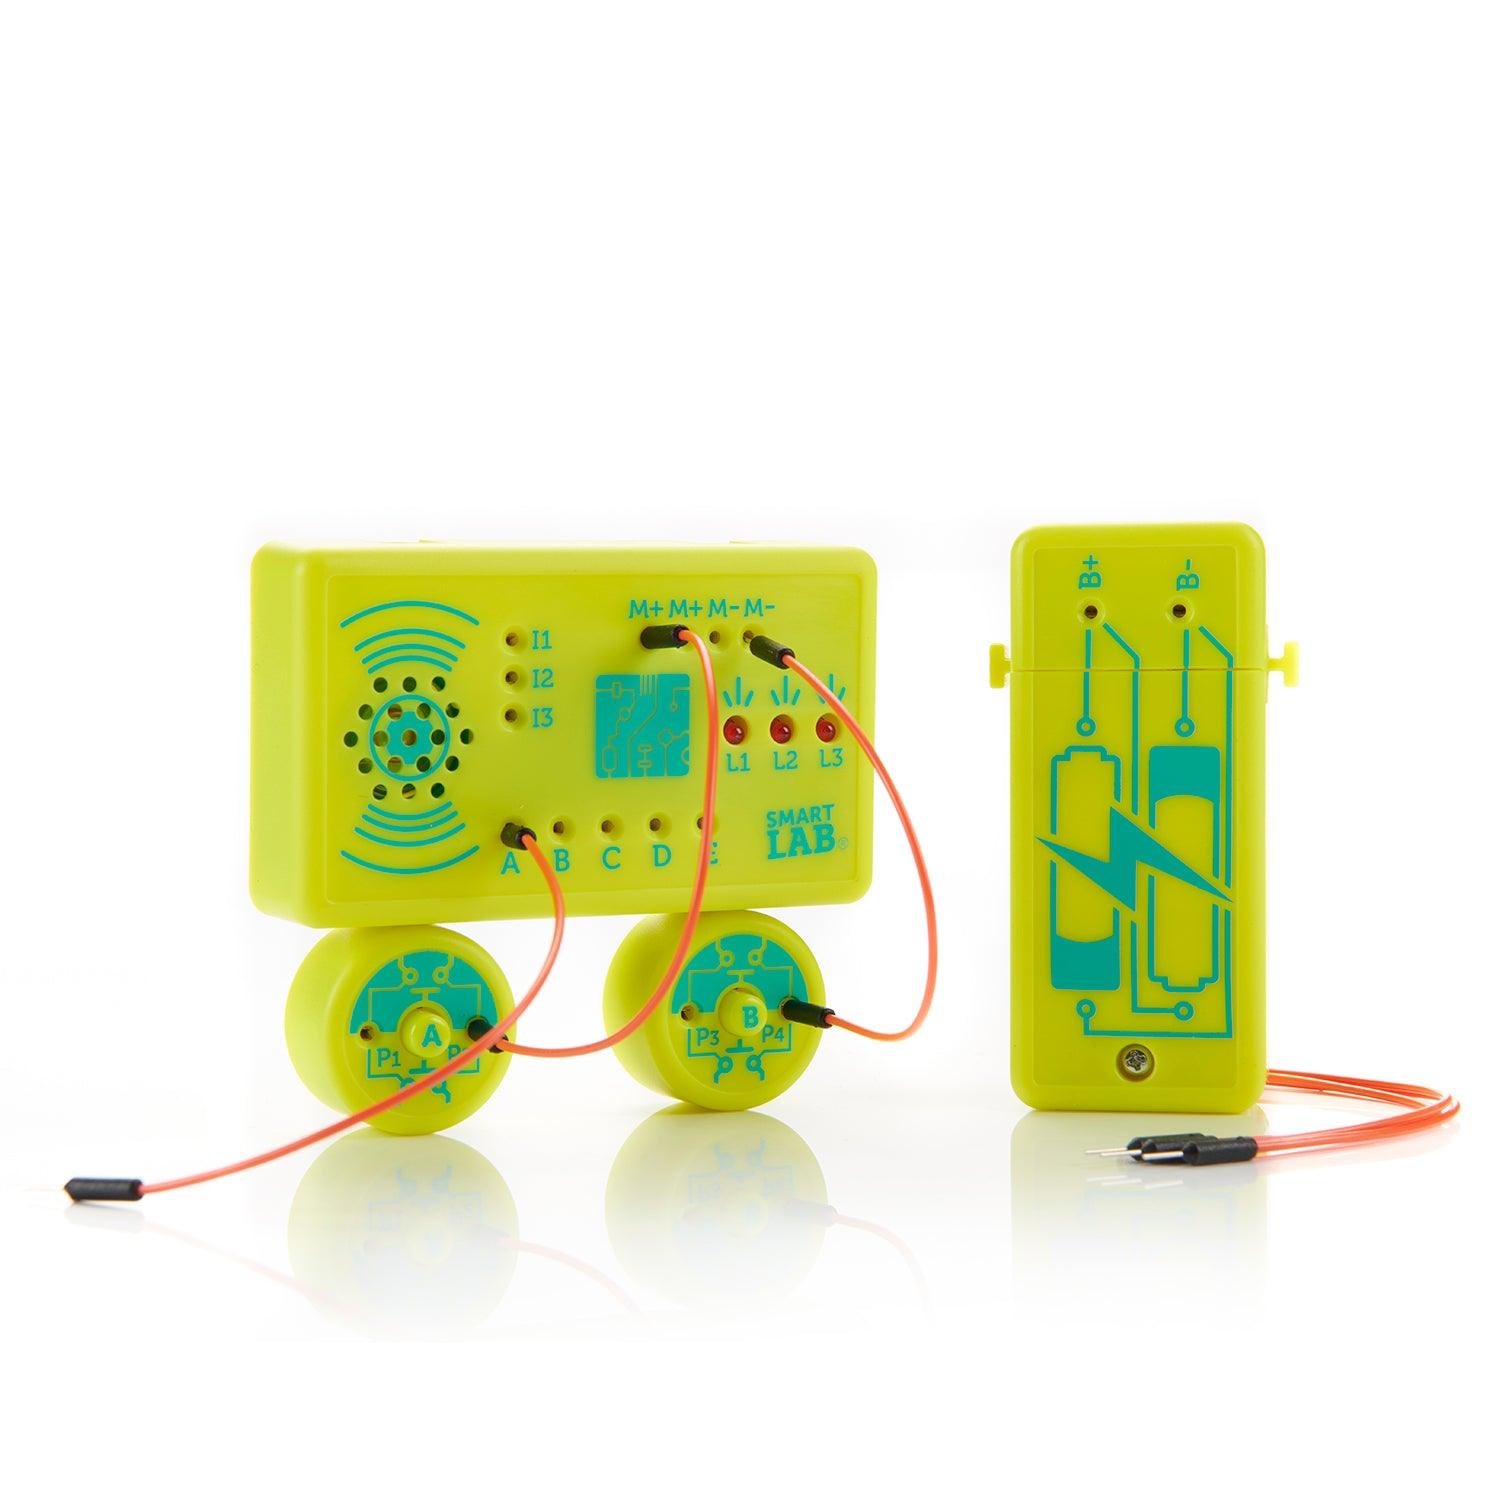 Tiny Circuits Kit - Kits - Science Museum Shop